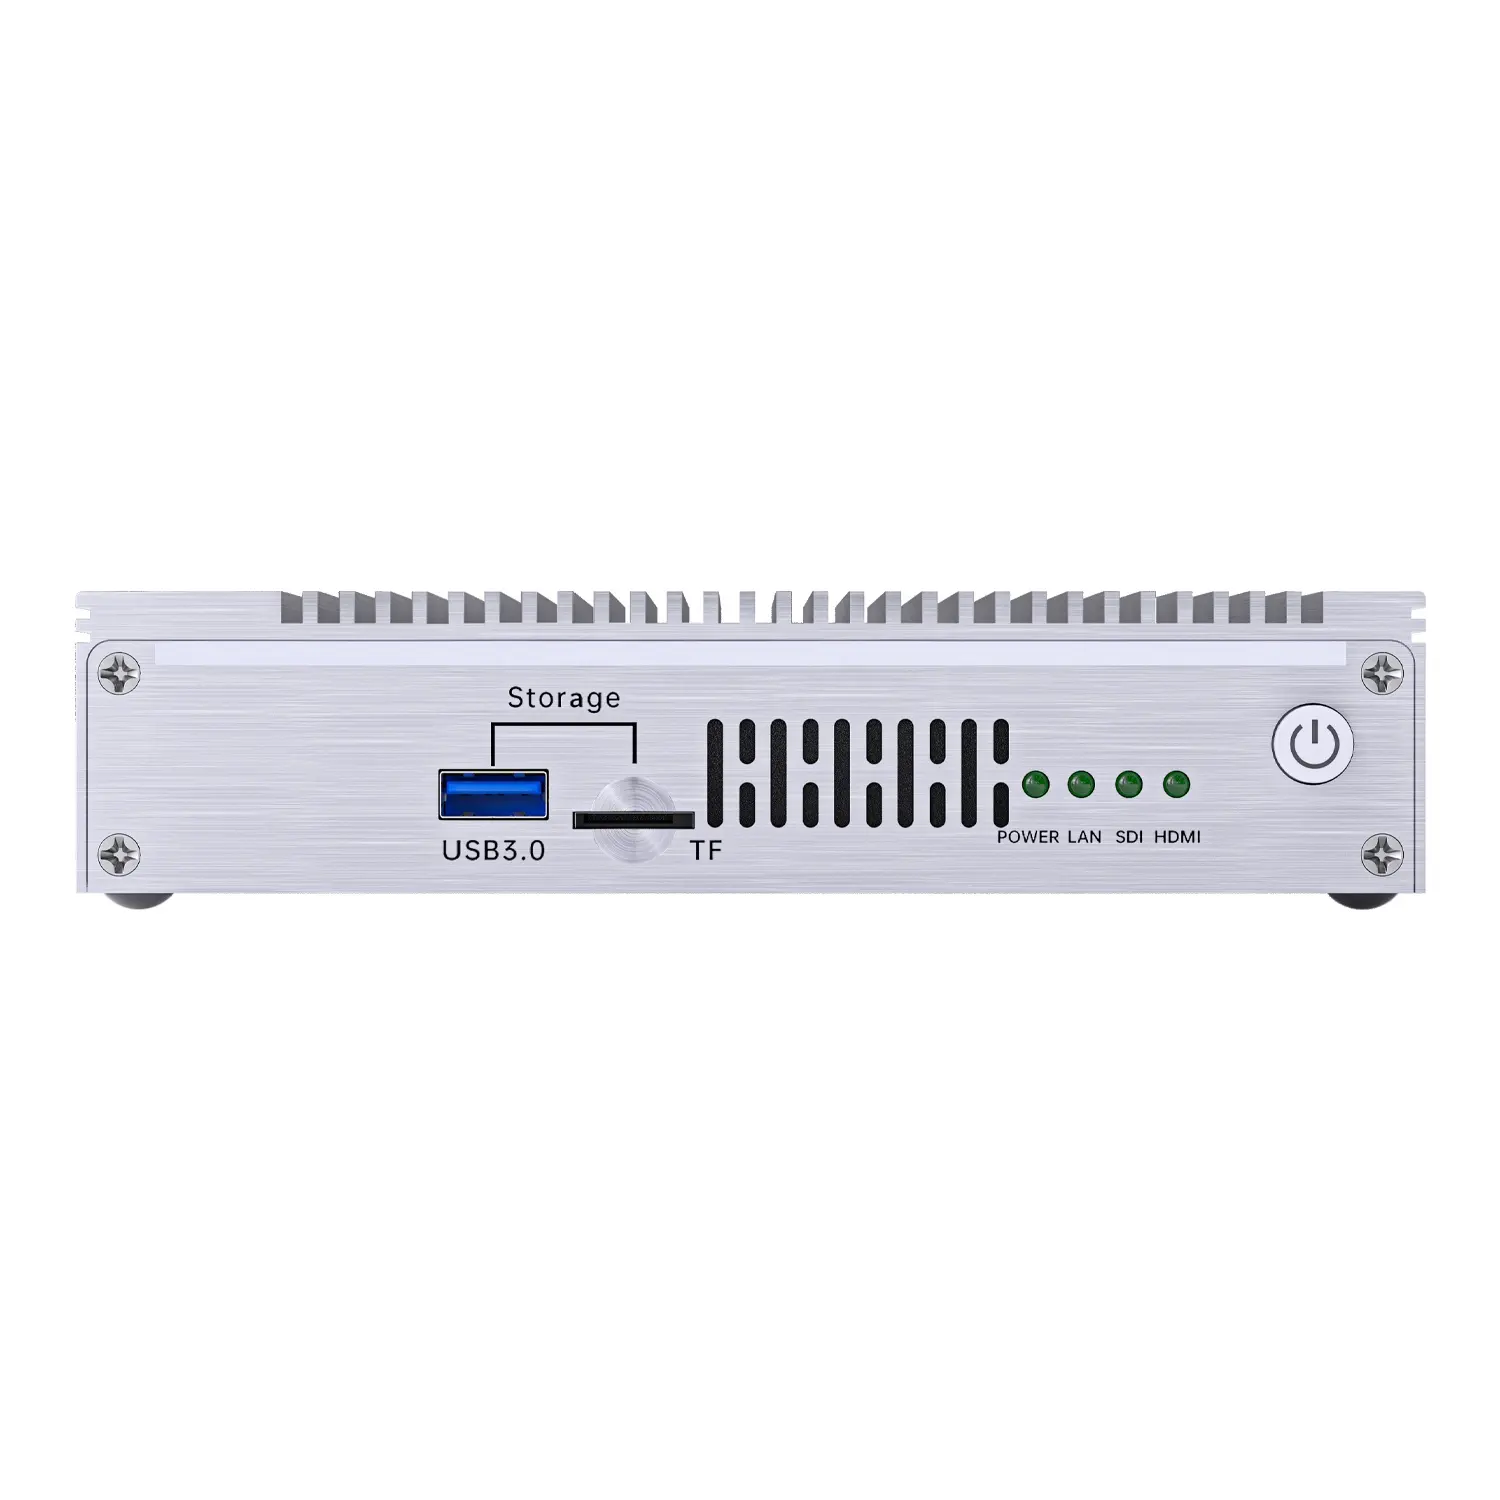 4K60 12G SDI StandAlone Endoscope 2 Channel 4K Switchable RTMP HDMI Encoder Capture Card Box Digital Video Recorder